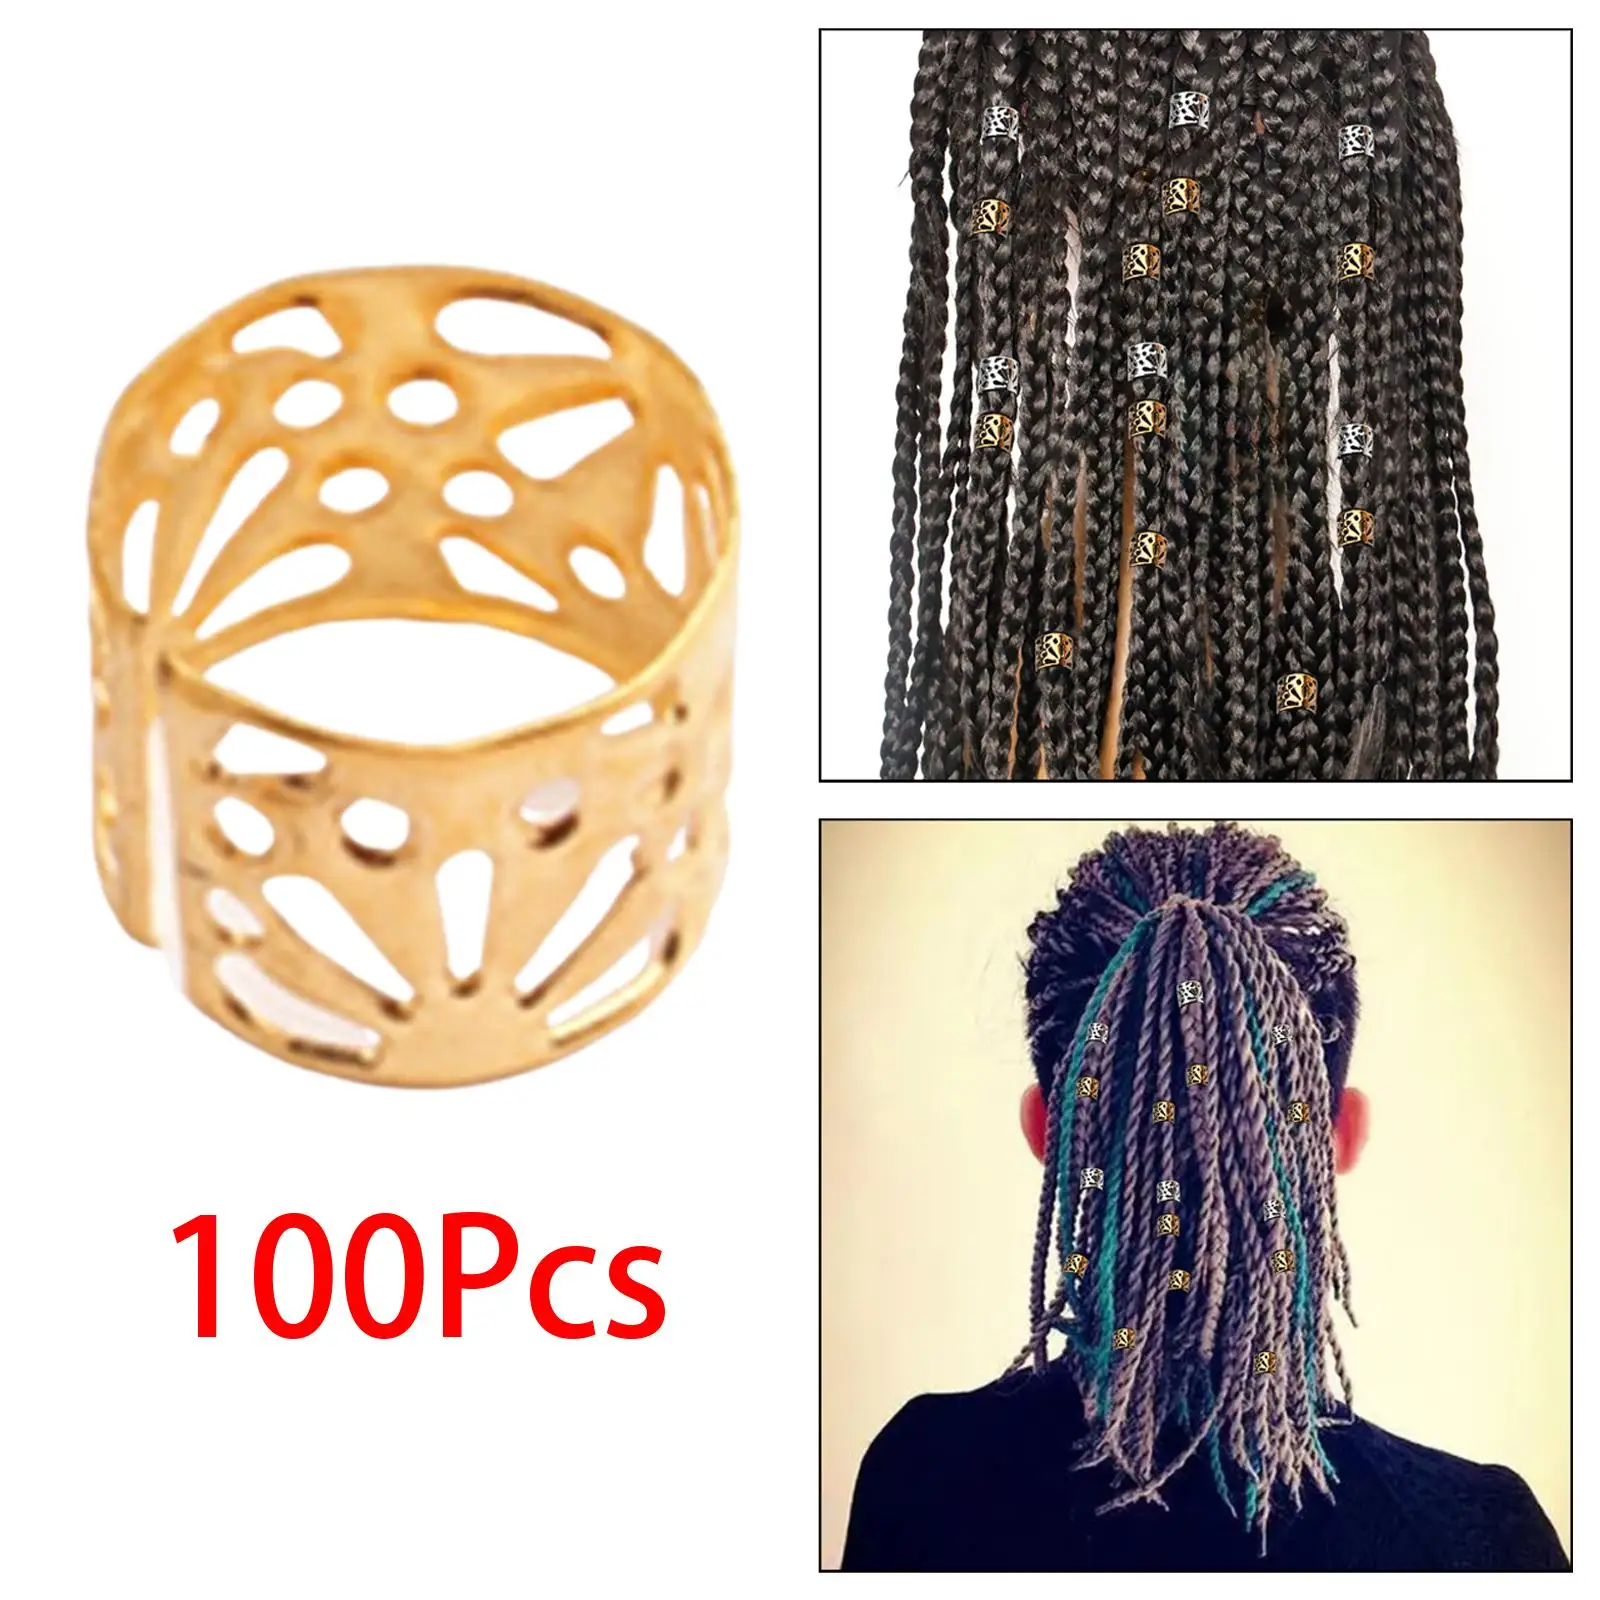 100x Dreadlocks Beads Hair Accessories, Hollow Pattern Opening Metal Clips Cuffs Rings Hair Braid Rings Clips, Beard Decoration